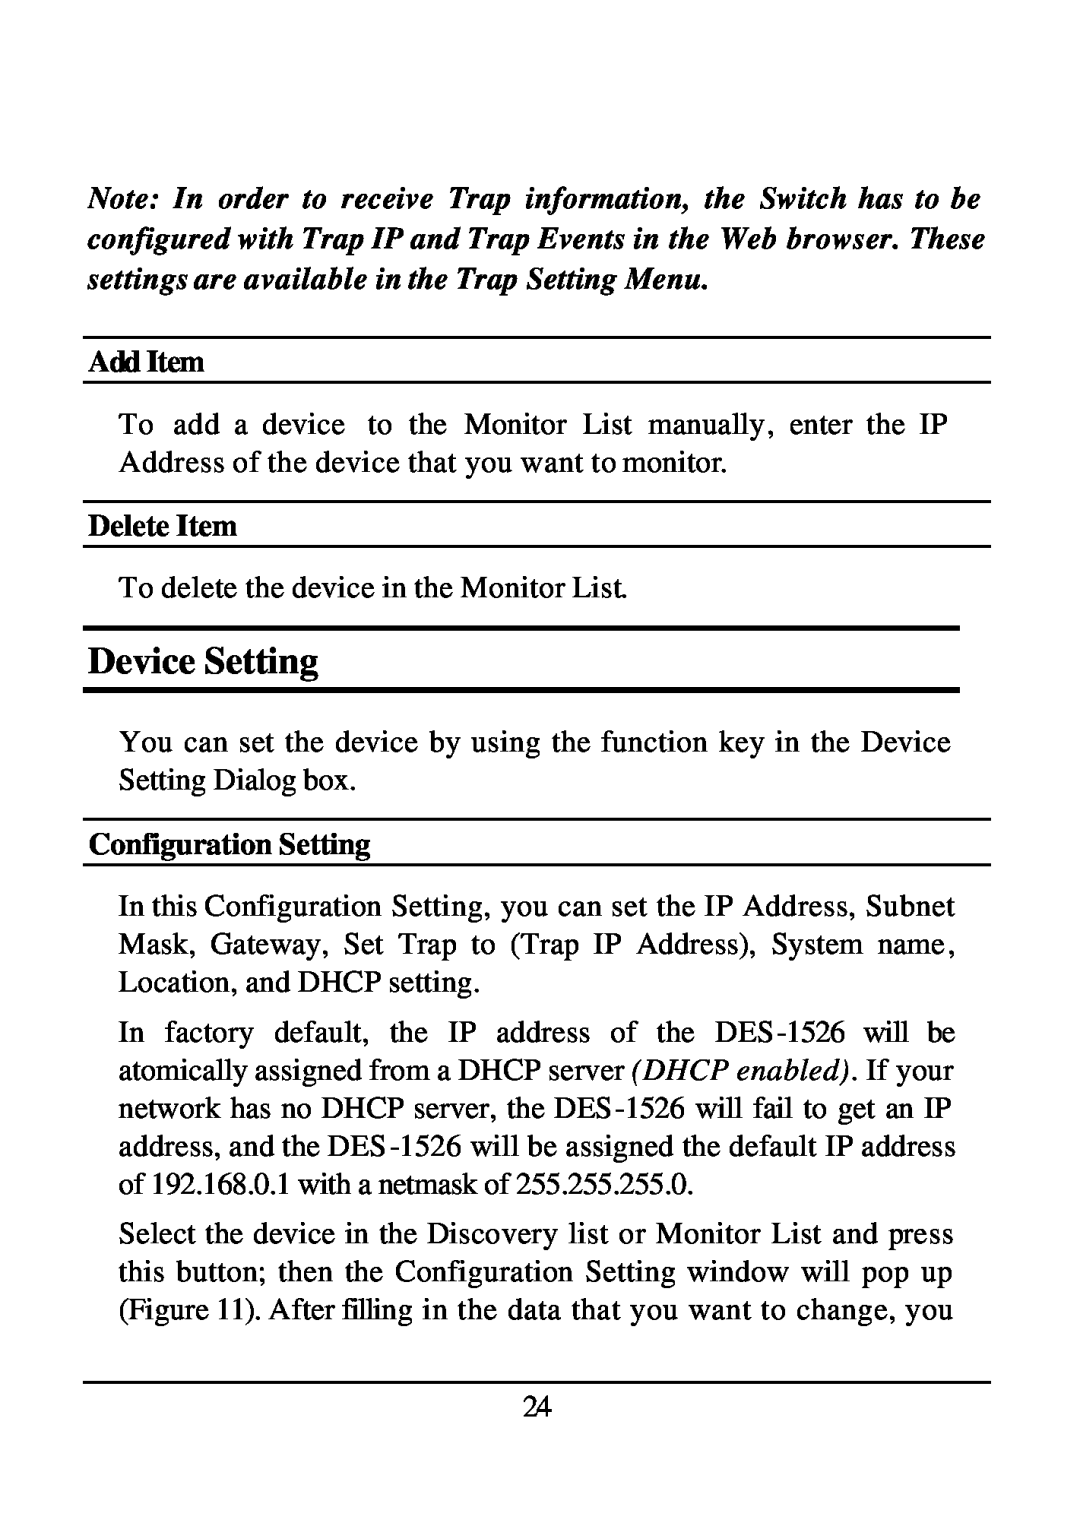 D-Link DES-1526 manual Device Setting, Add Item, Delete Item, Configuration Setting 